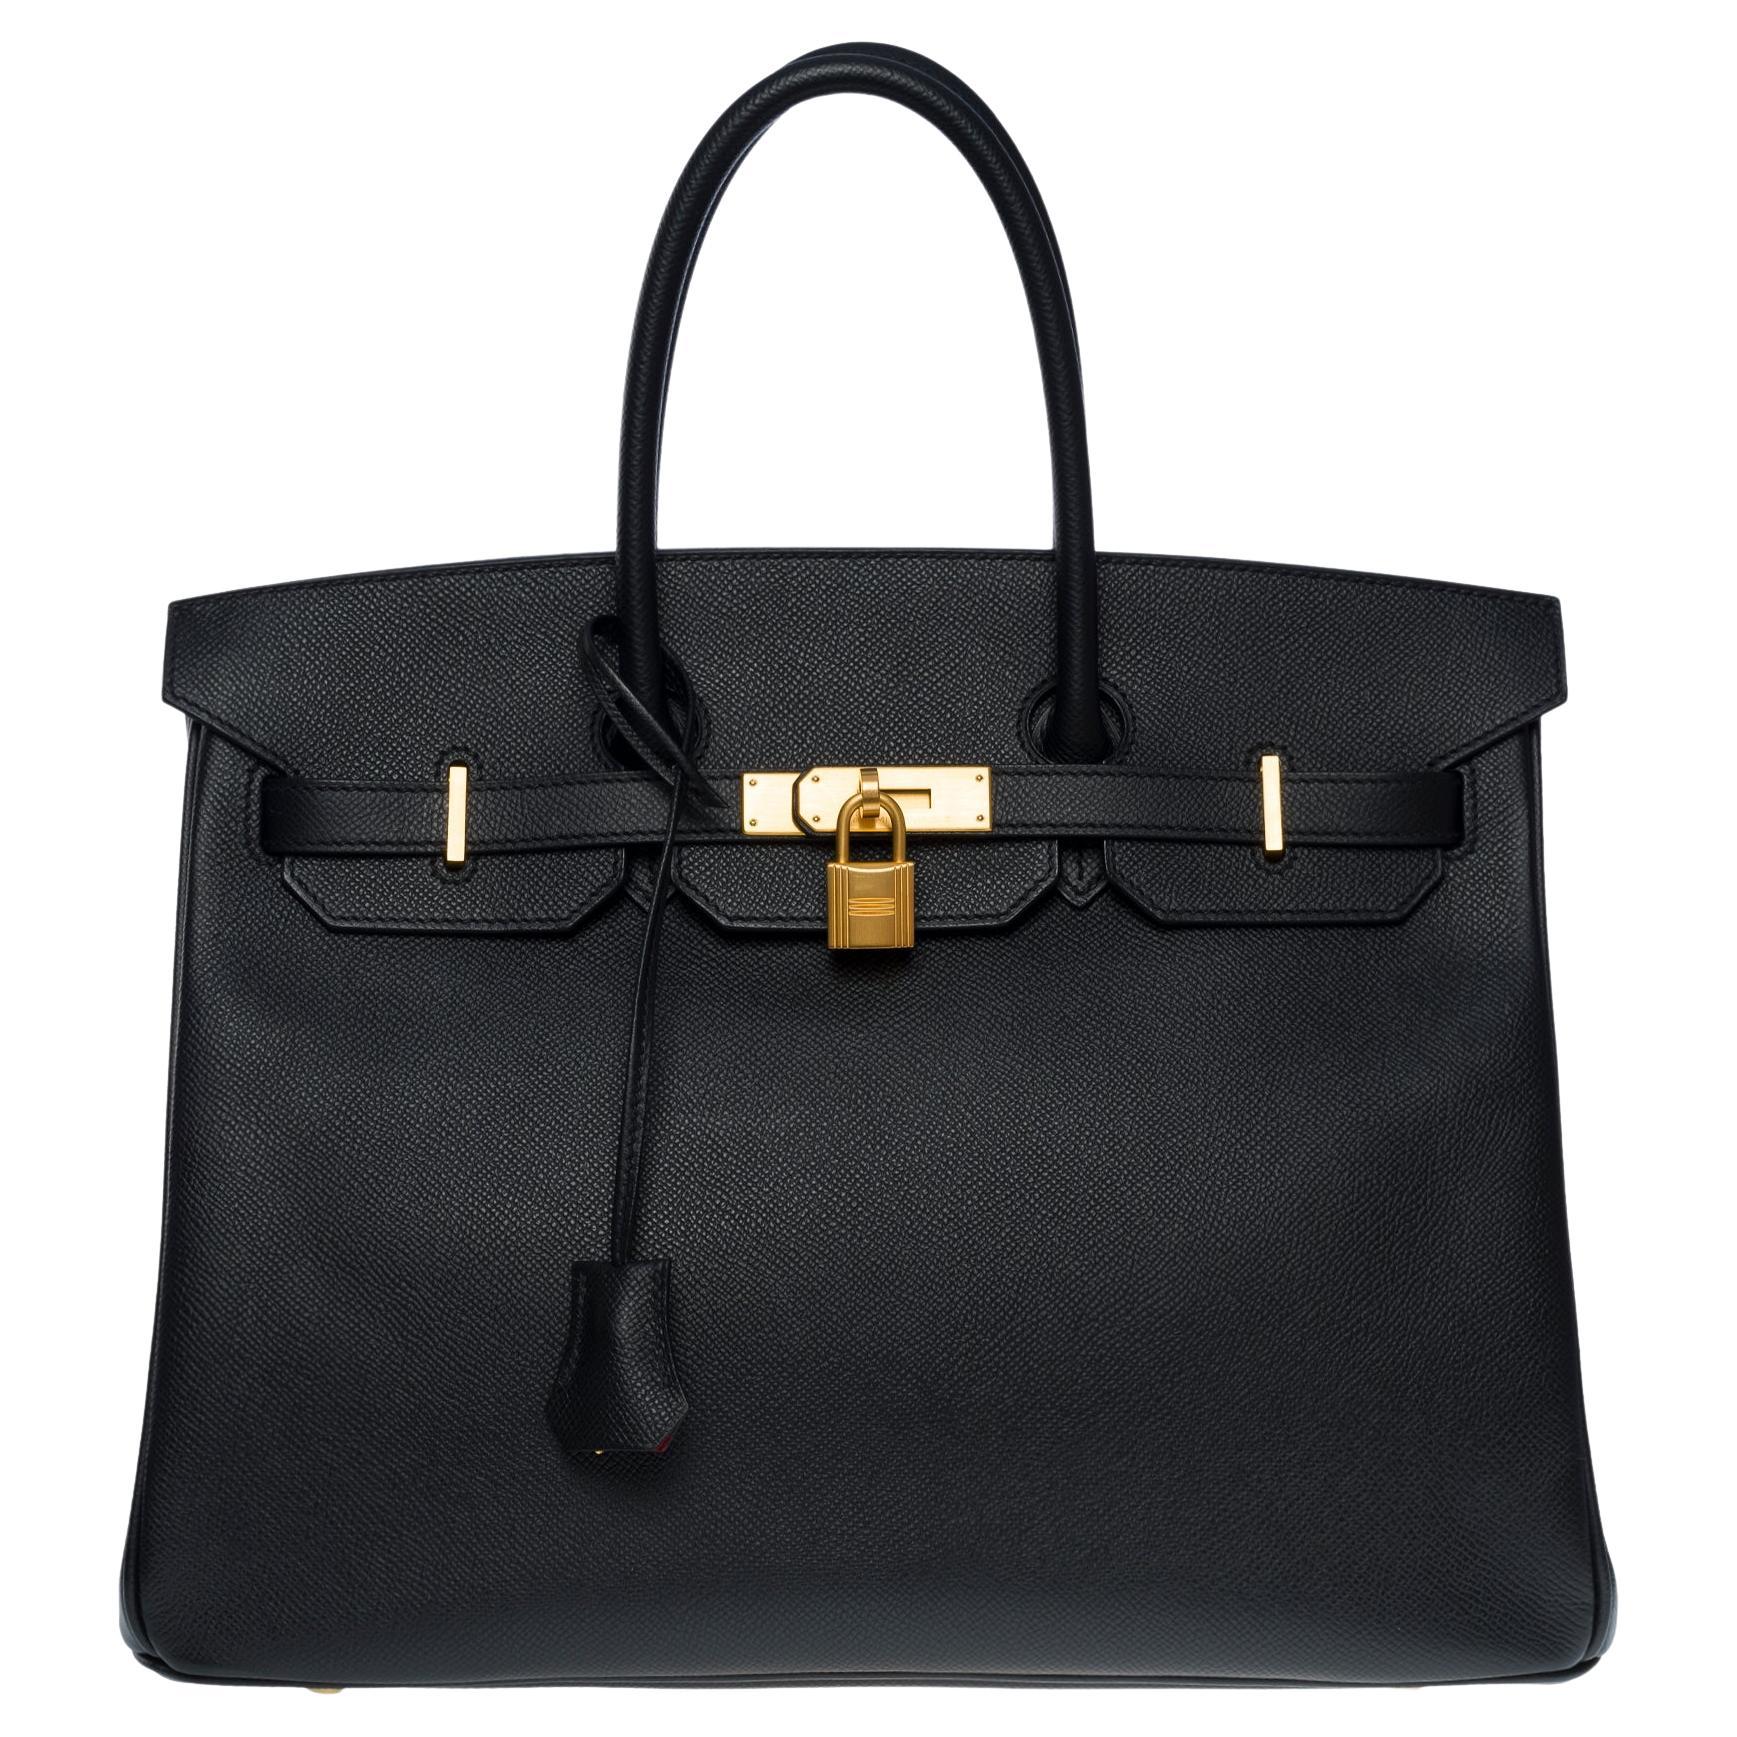 Rare Hermès Birkin 35 HSS (Special Order) handbag in black epsom leather, BGHW